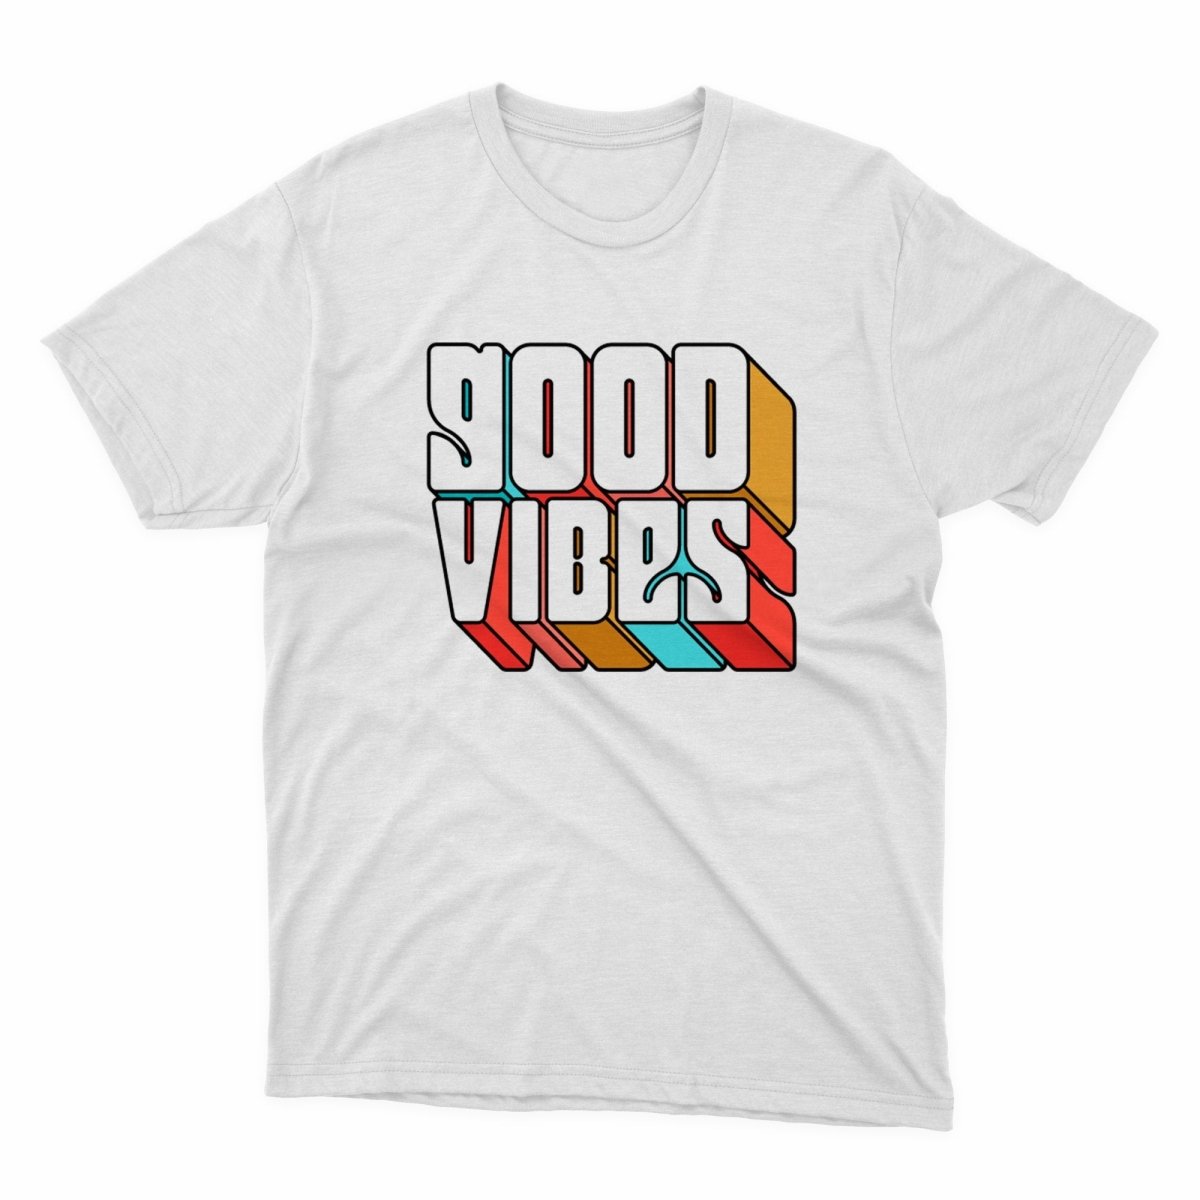 Good Vibes Shirt - stickerbullGood Vibes ShirtShirtsPrintifystickerbull43950461606257342959WhiteSa white t - shirt with the words good vibes on it